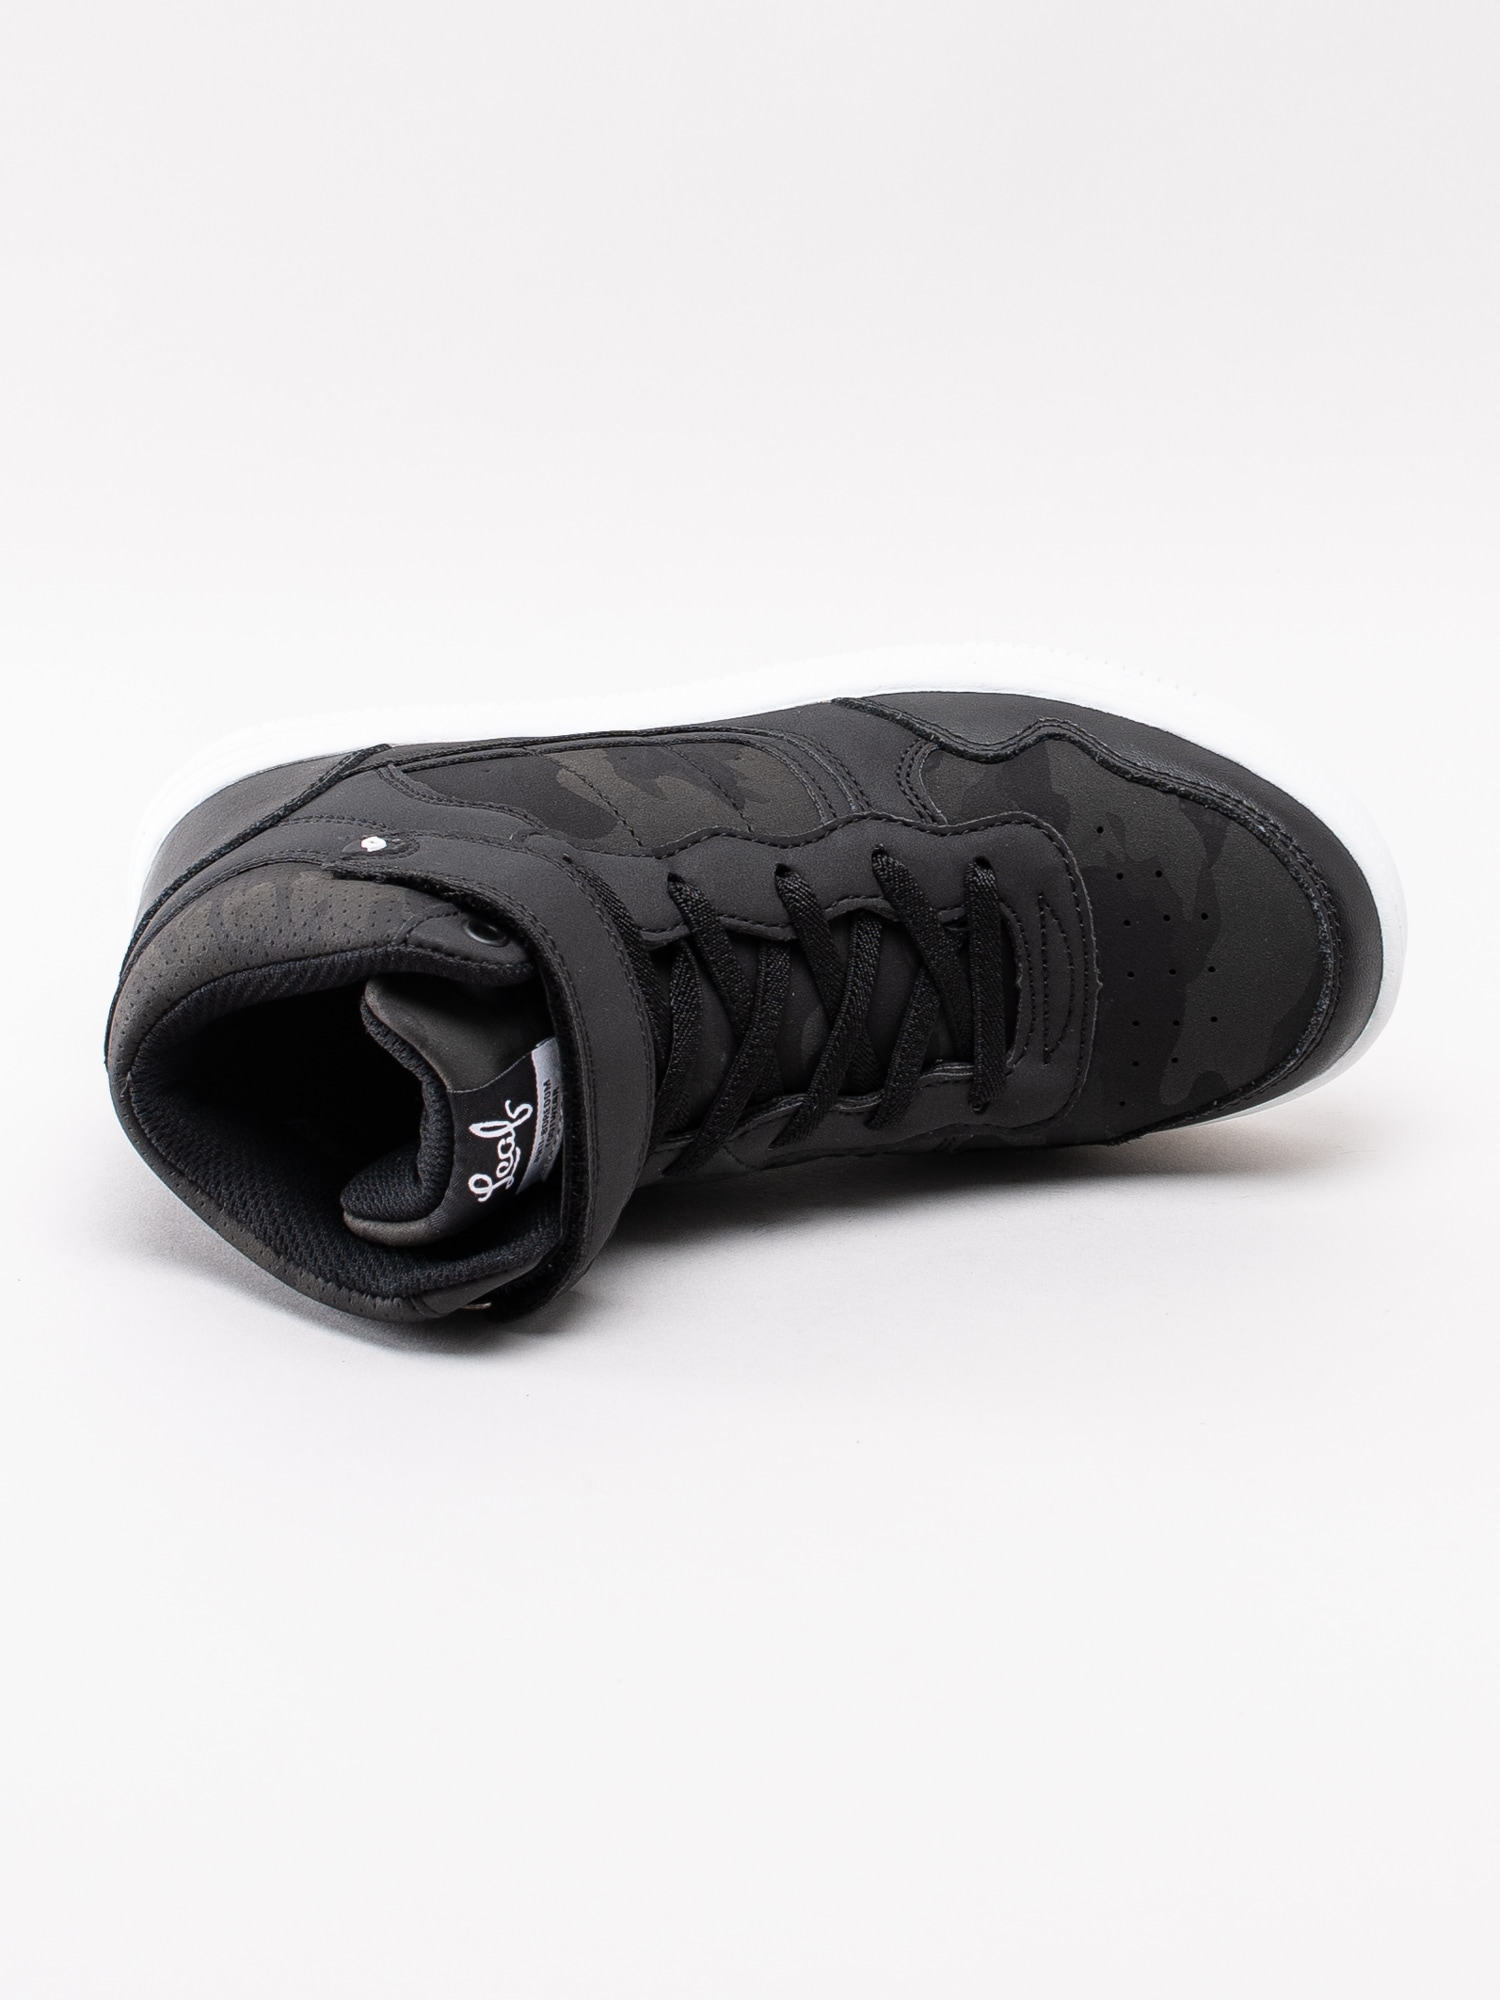 42193067 Leaf Cabra High Black Camo svarta höga sneakers med kamouflage print-4